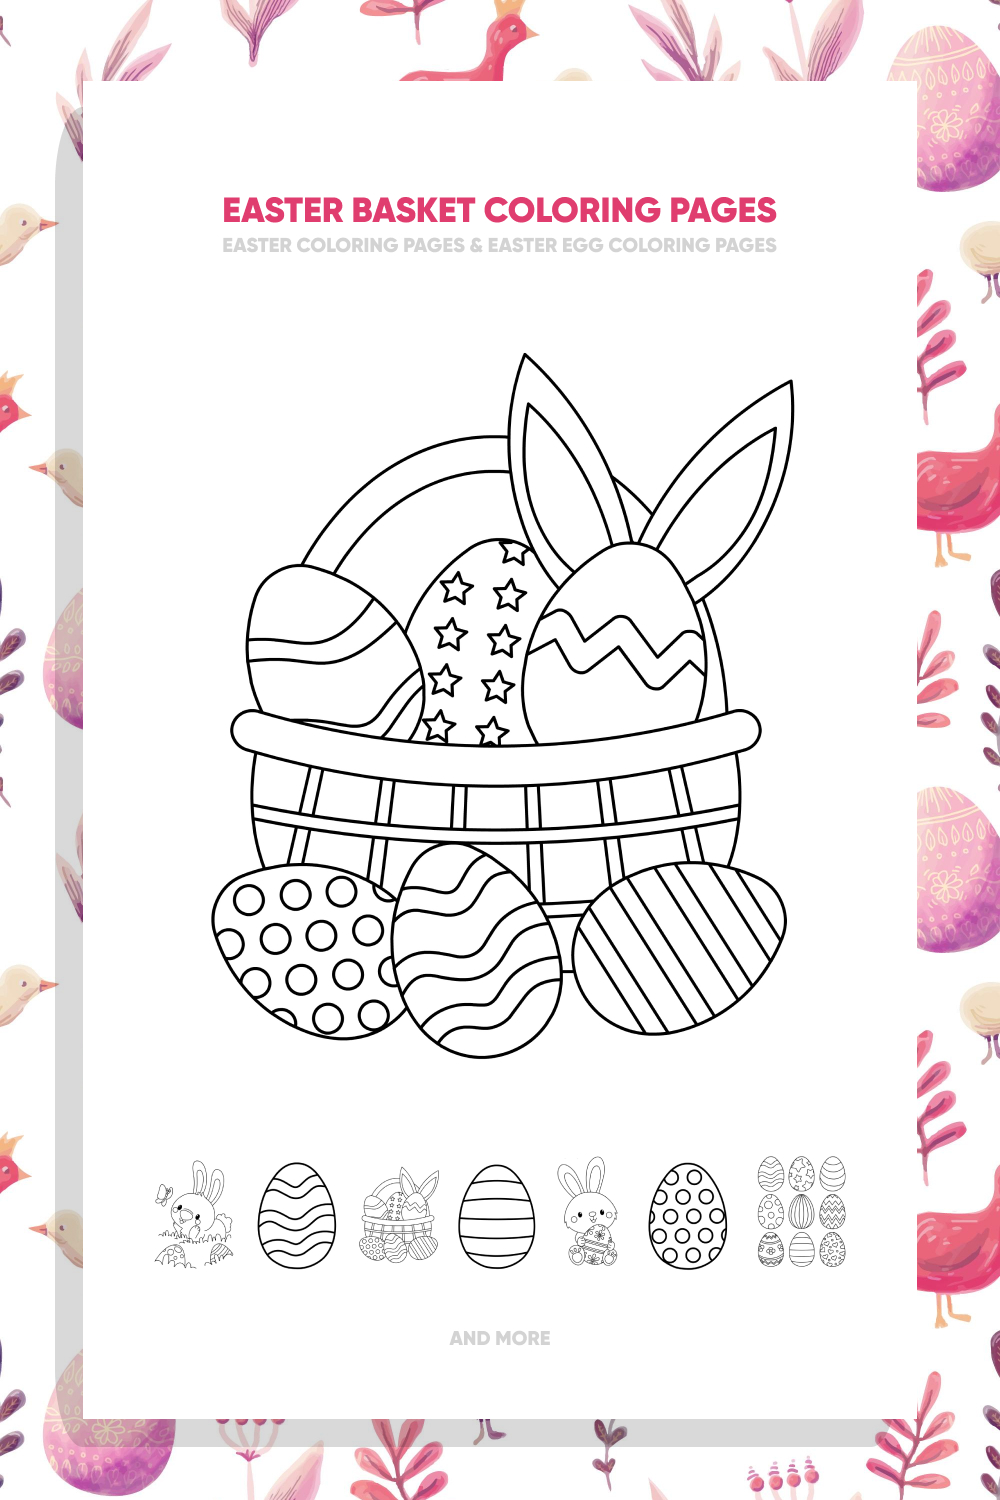 Easter Basket Coloring Pages pinterest.